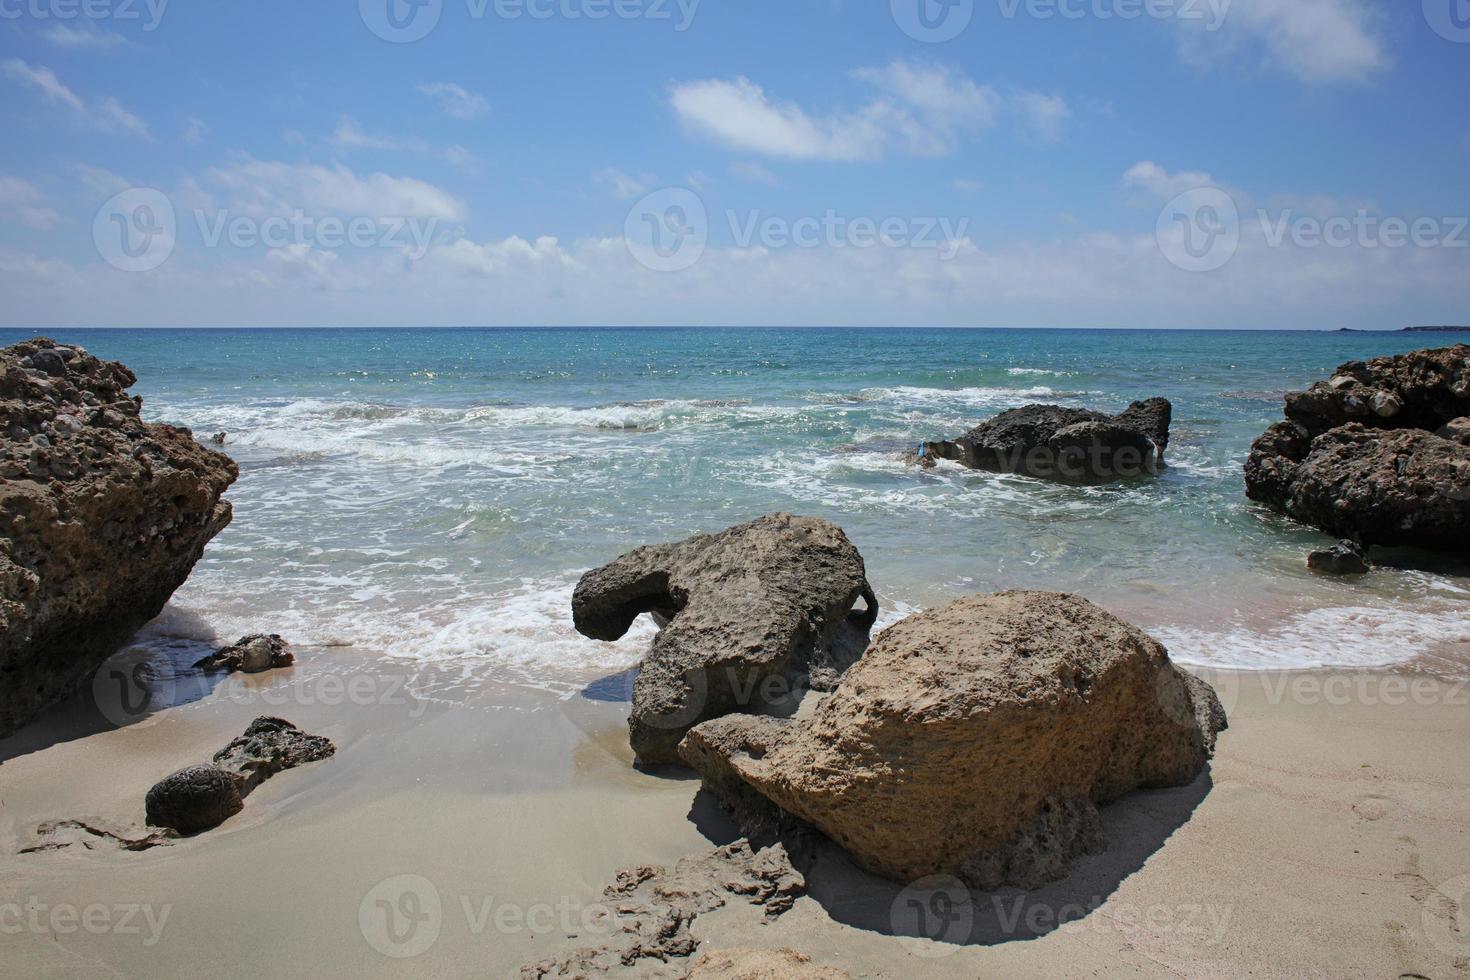 Falassarna Roter Sandstrand Kissamos Kreta Insel Sommerferien Saison foto